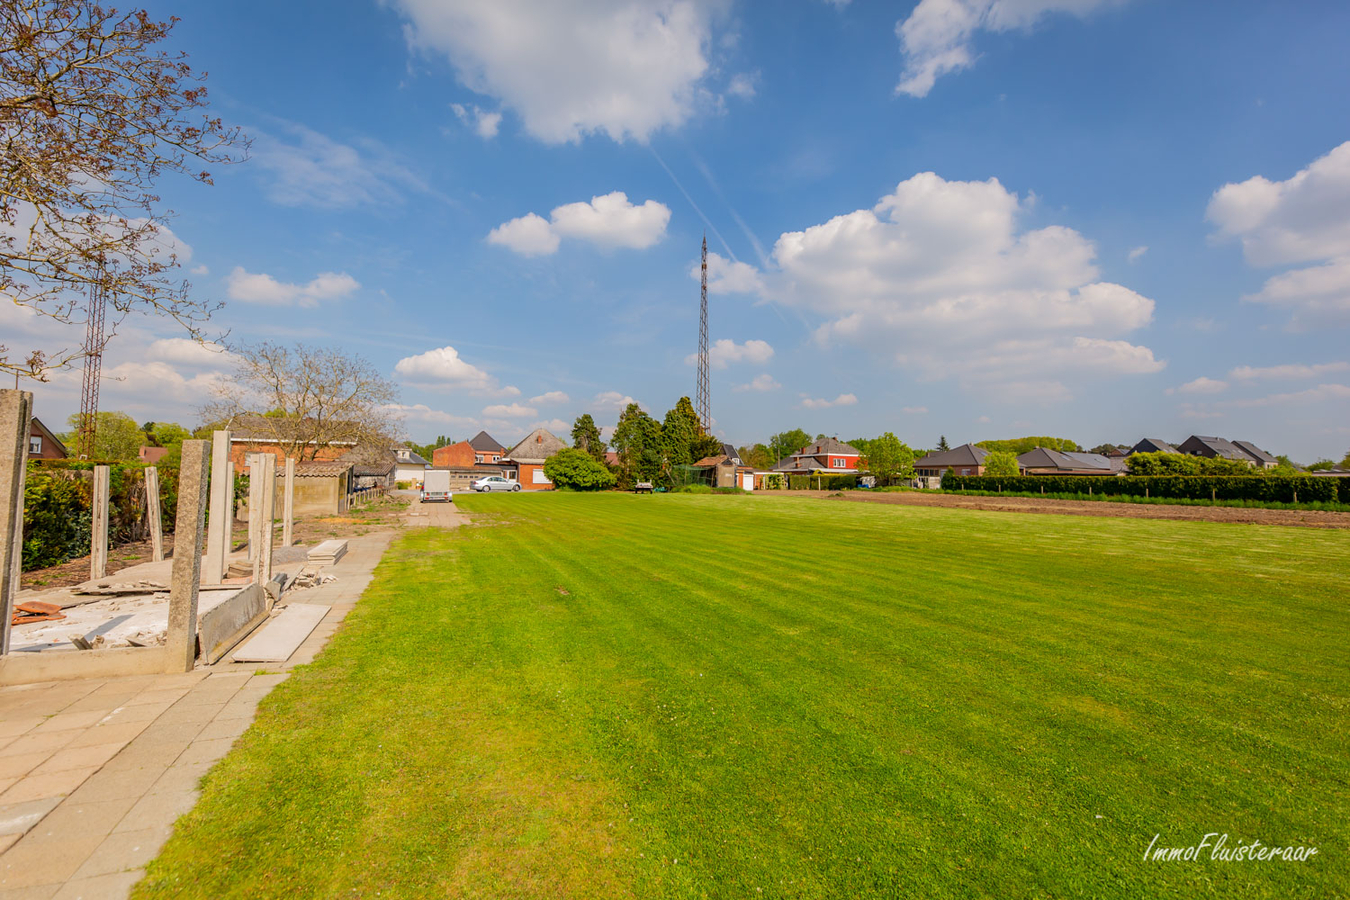 Property for sale in Betekom